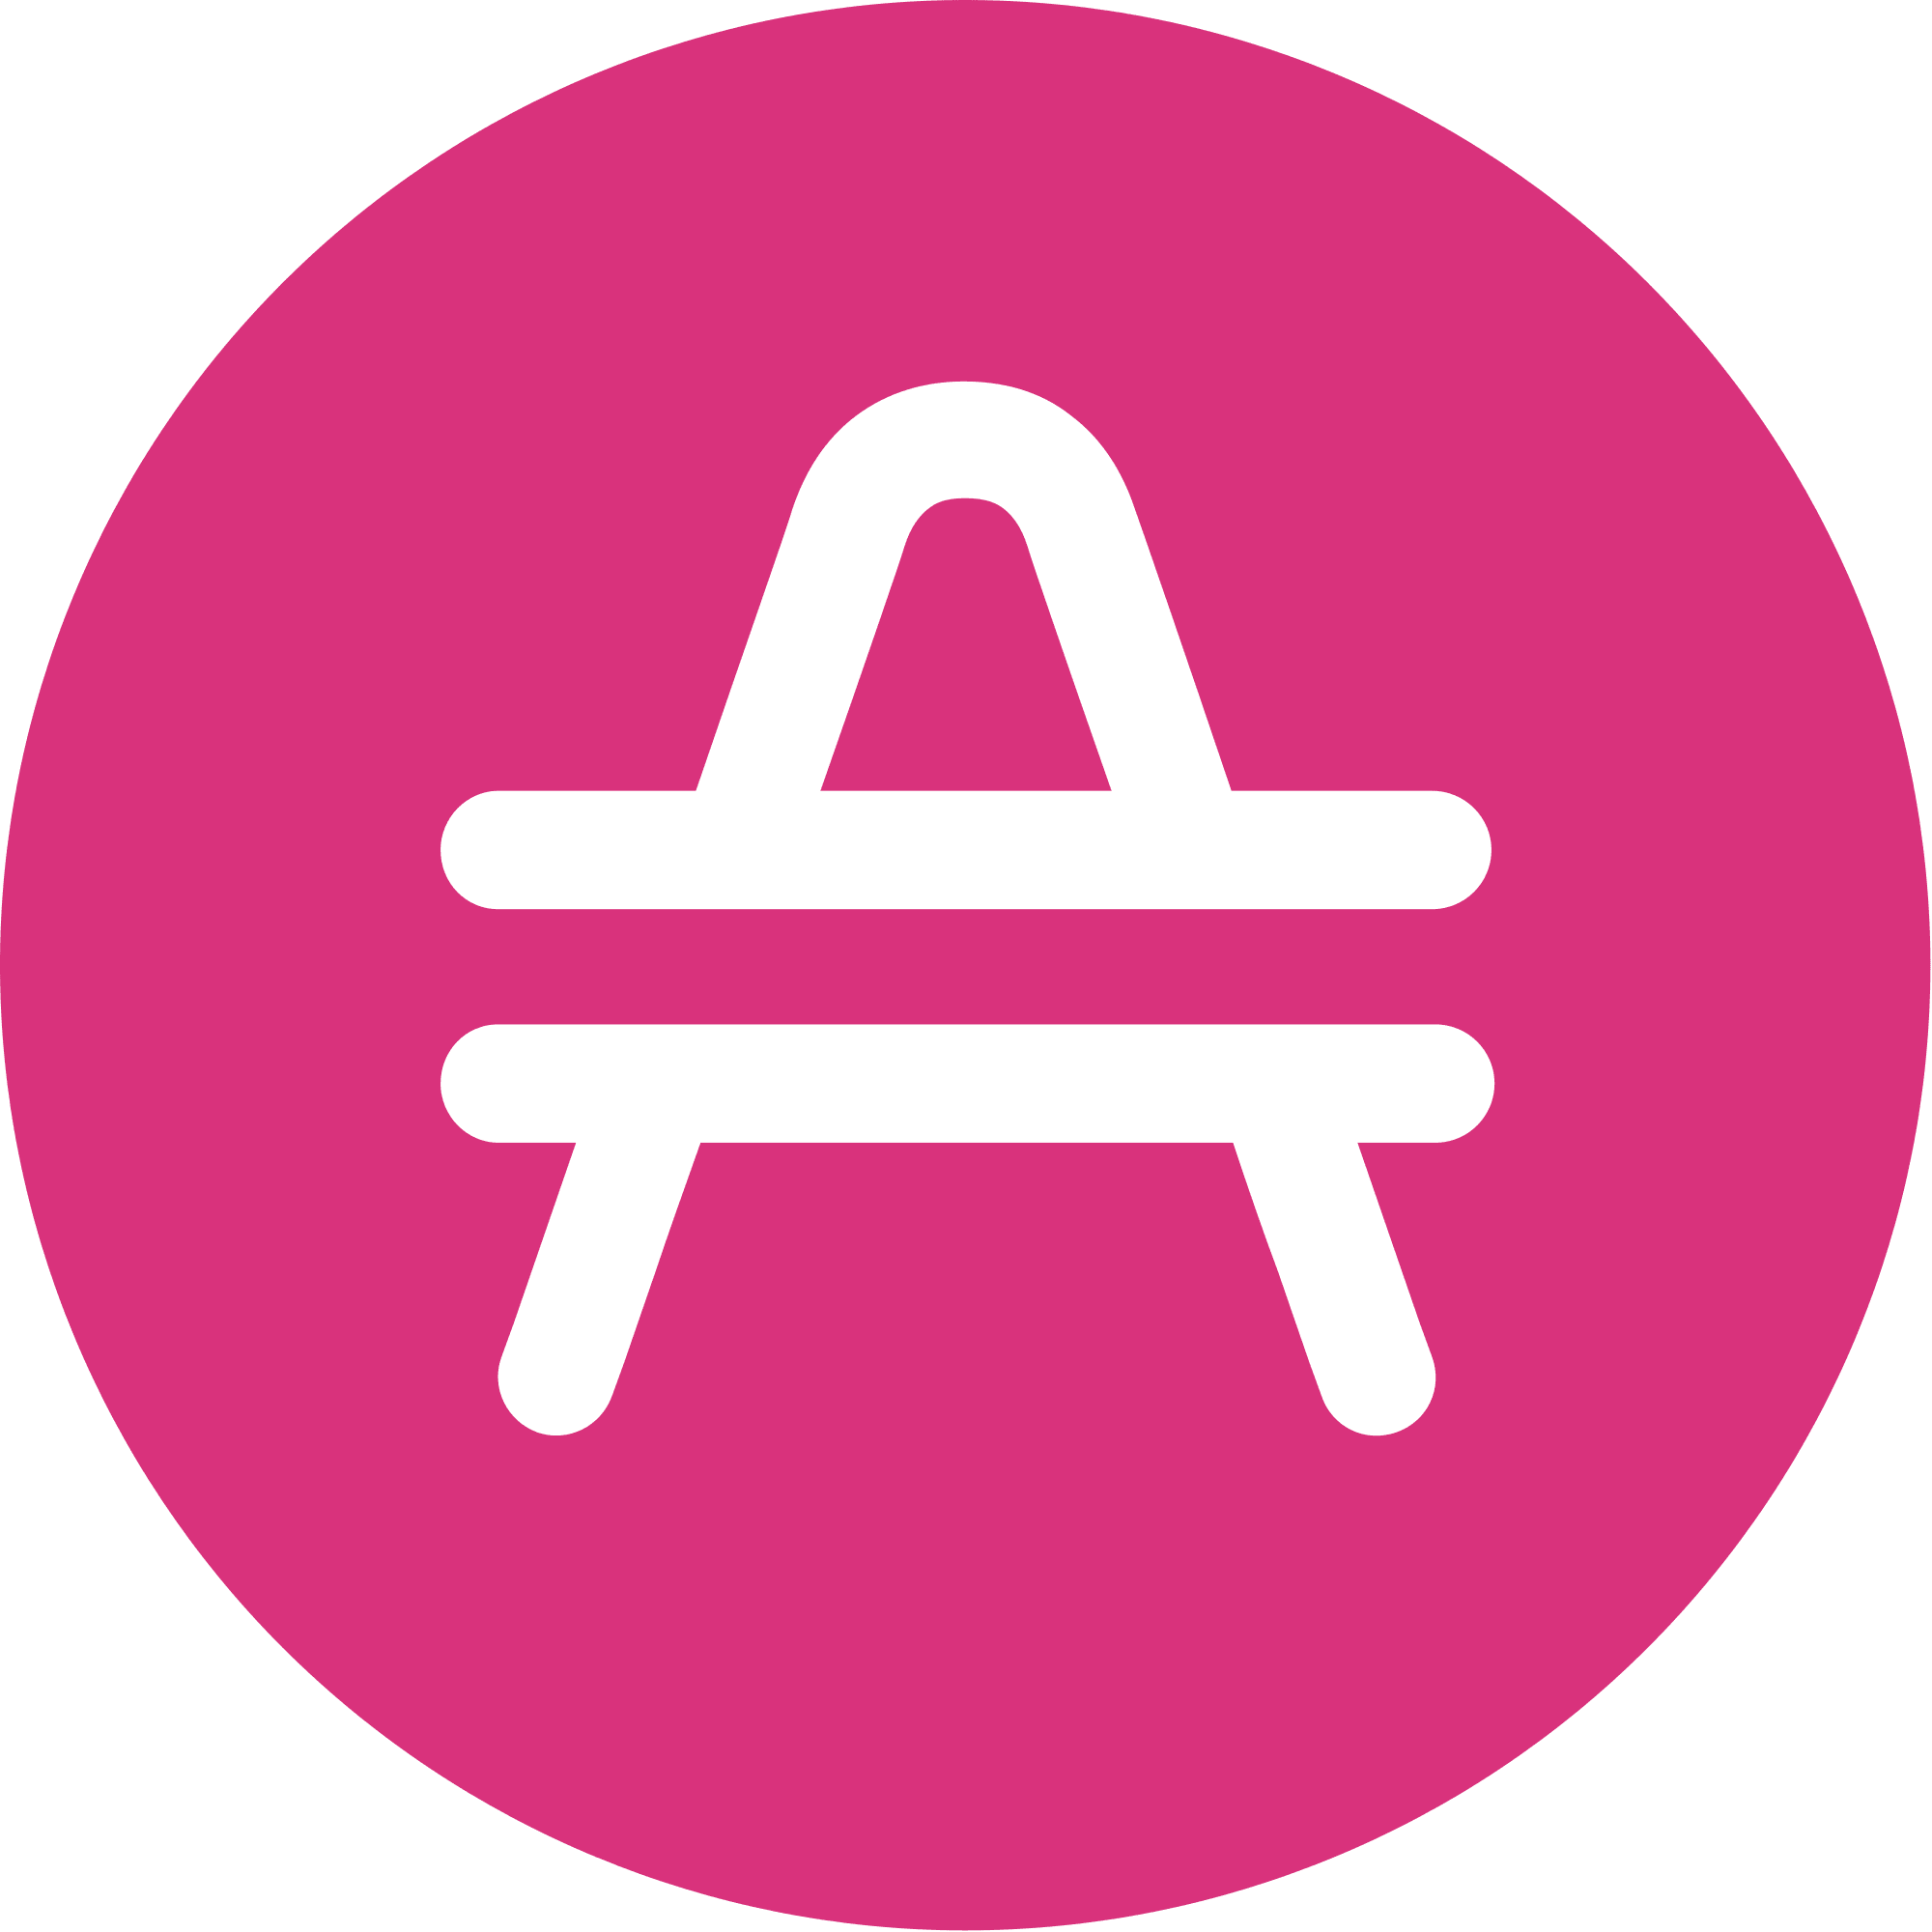 Amp (AMP) logo